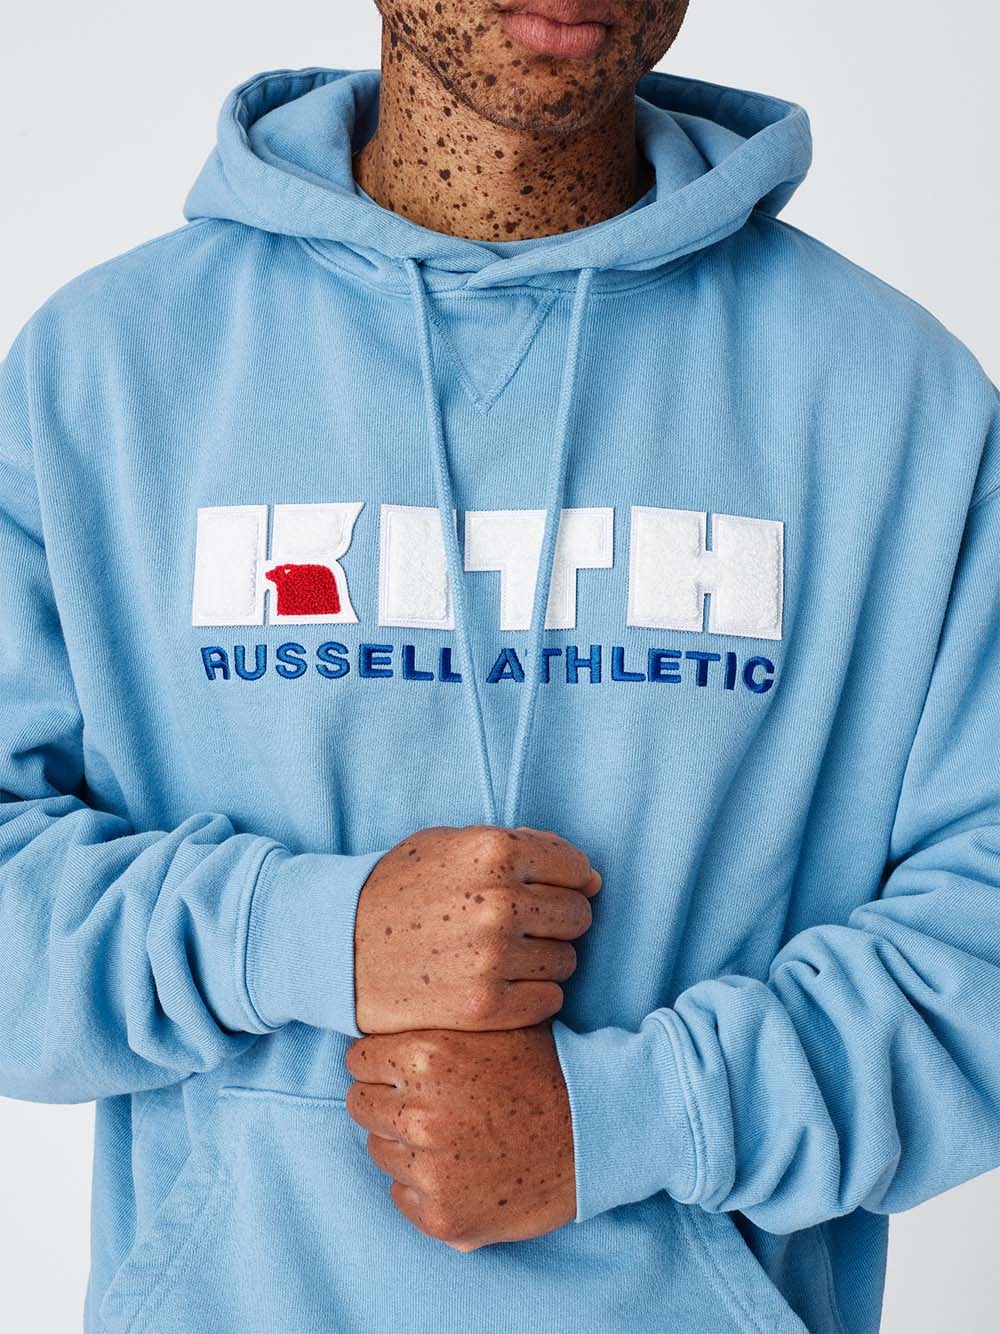 KITH x Russell Athletic 2019 春夏聯名系列 Lookbook 完整公佈